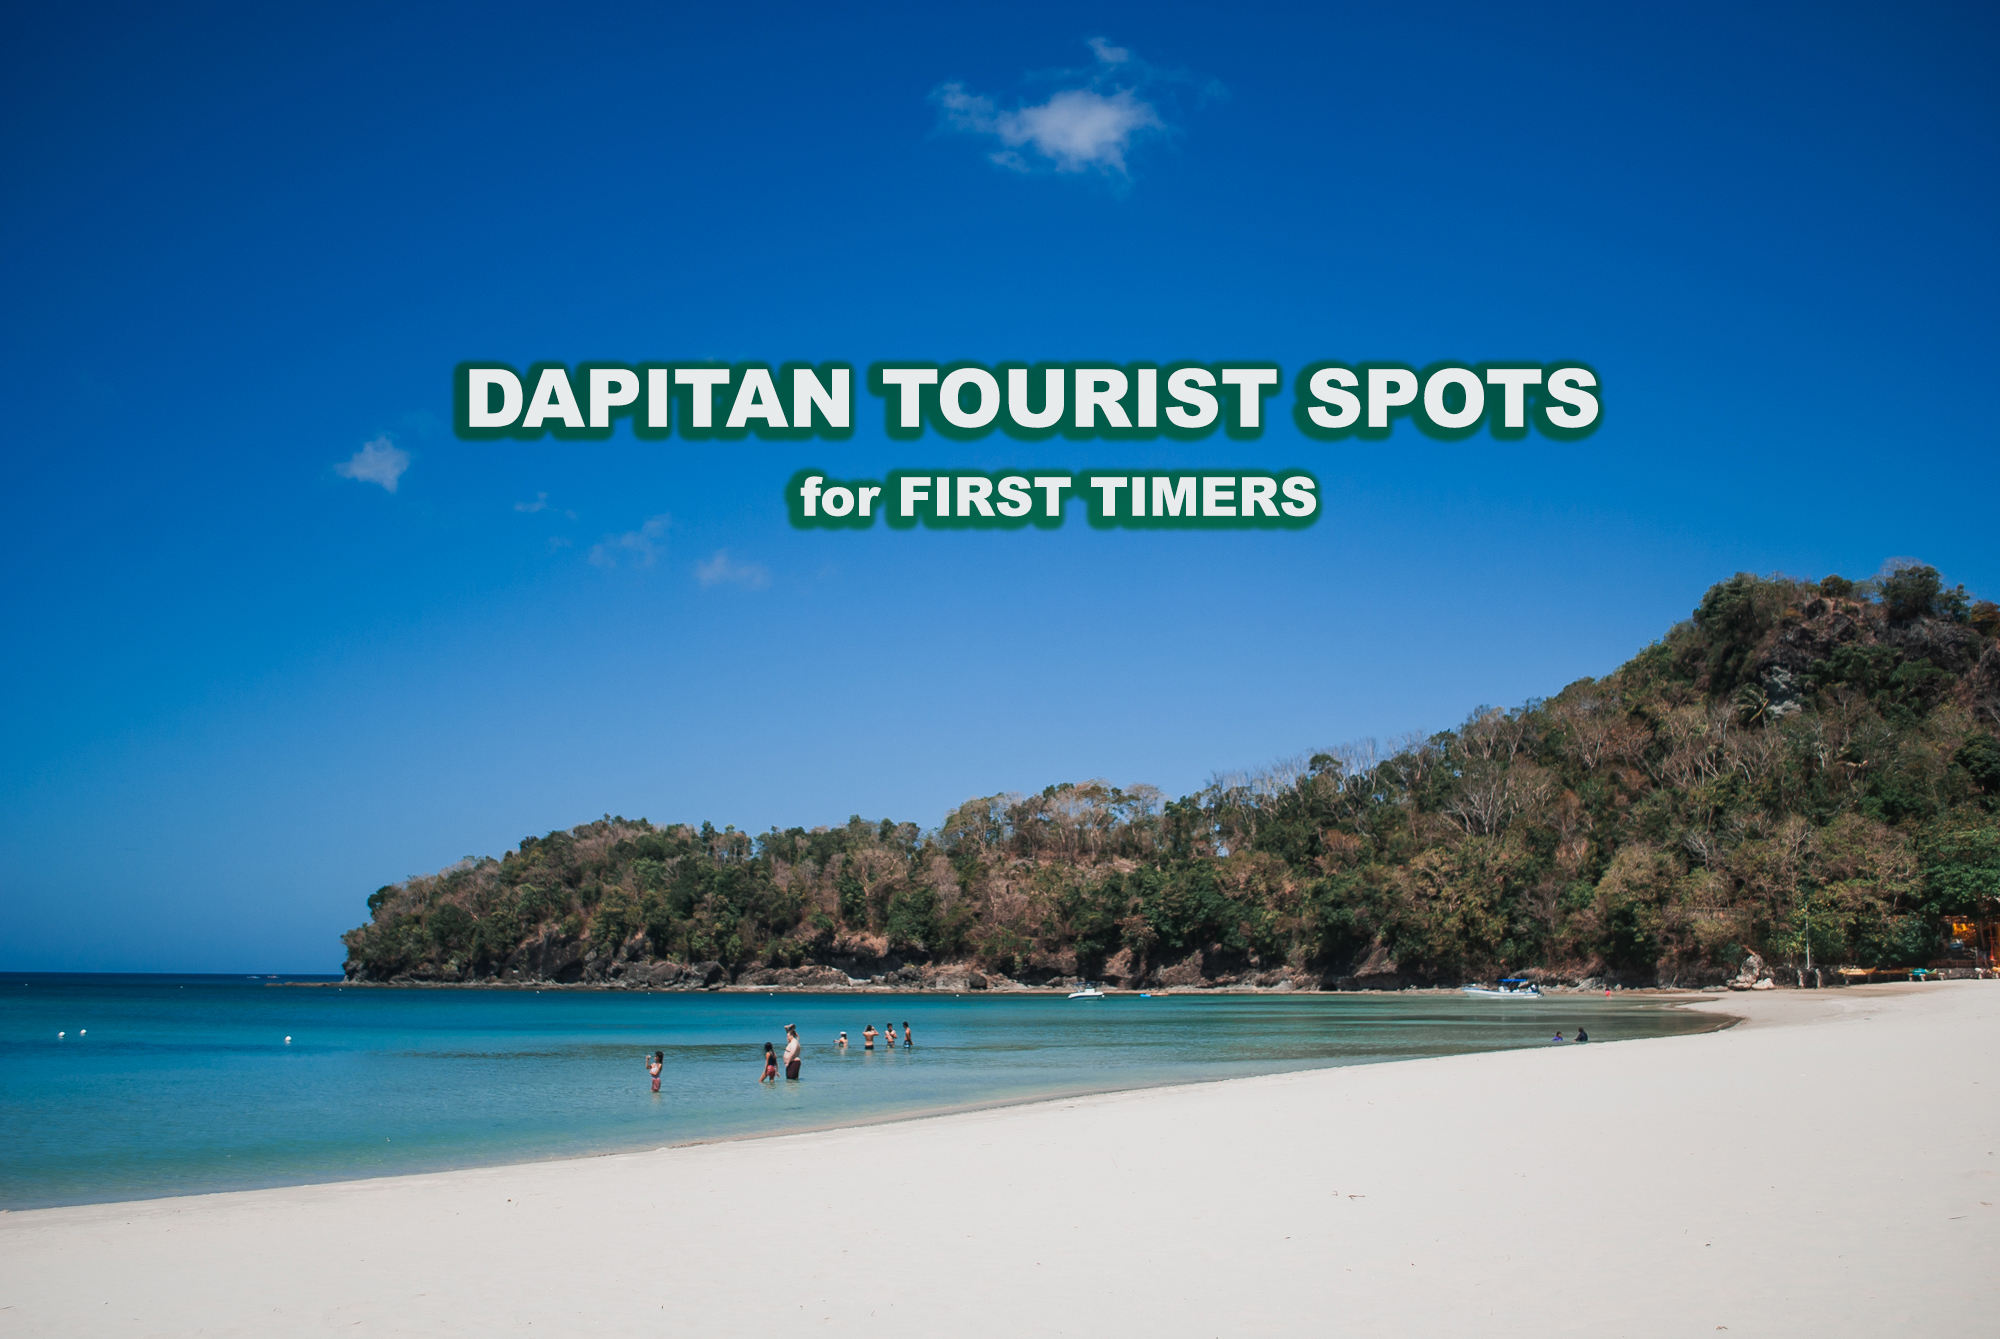 DAPITAN TOURIST SPOTS